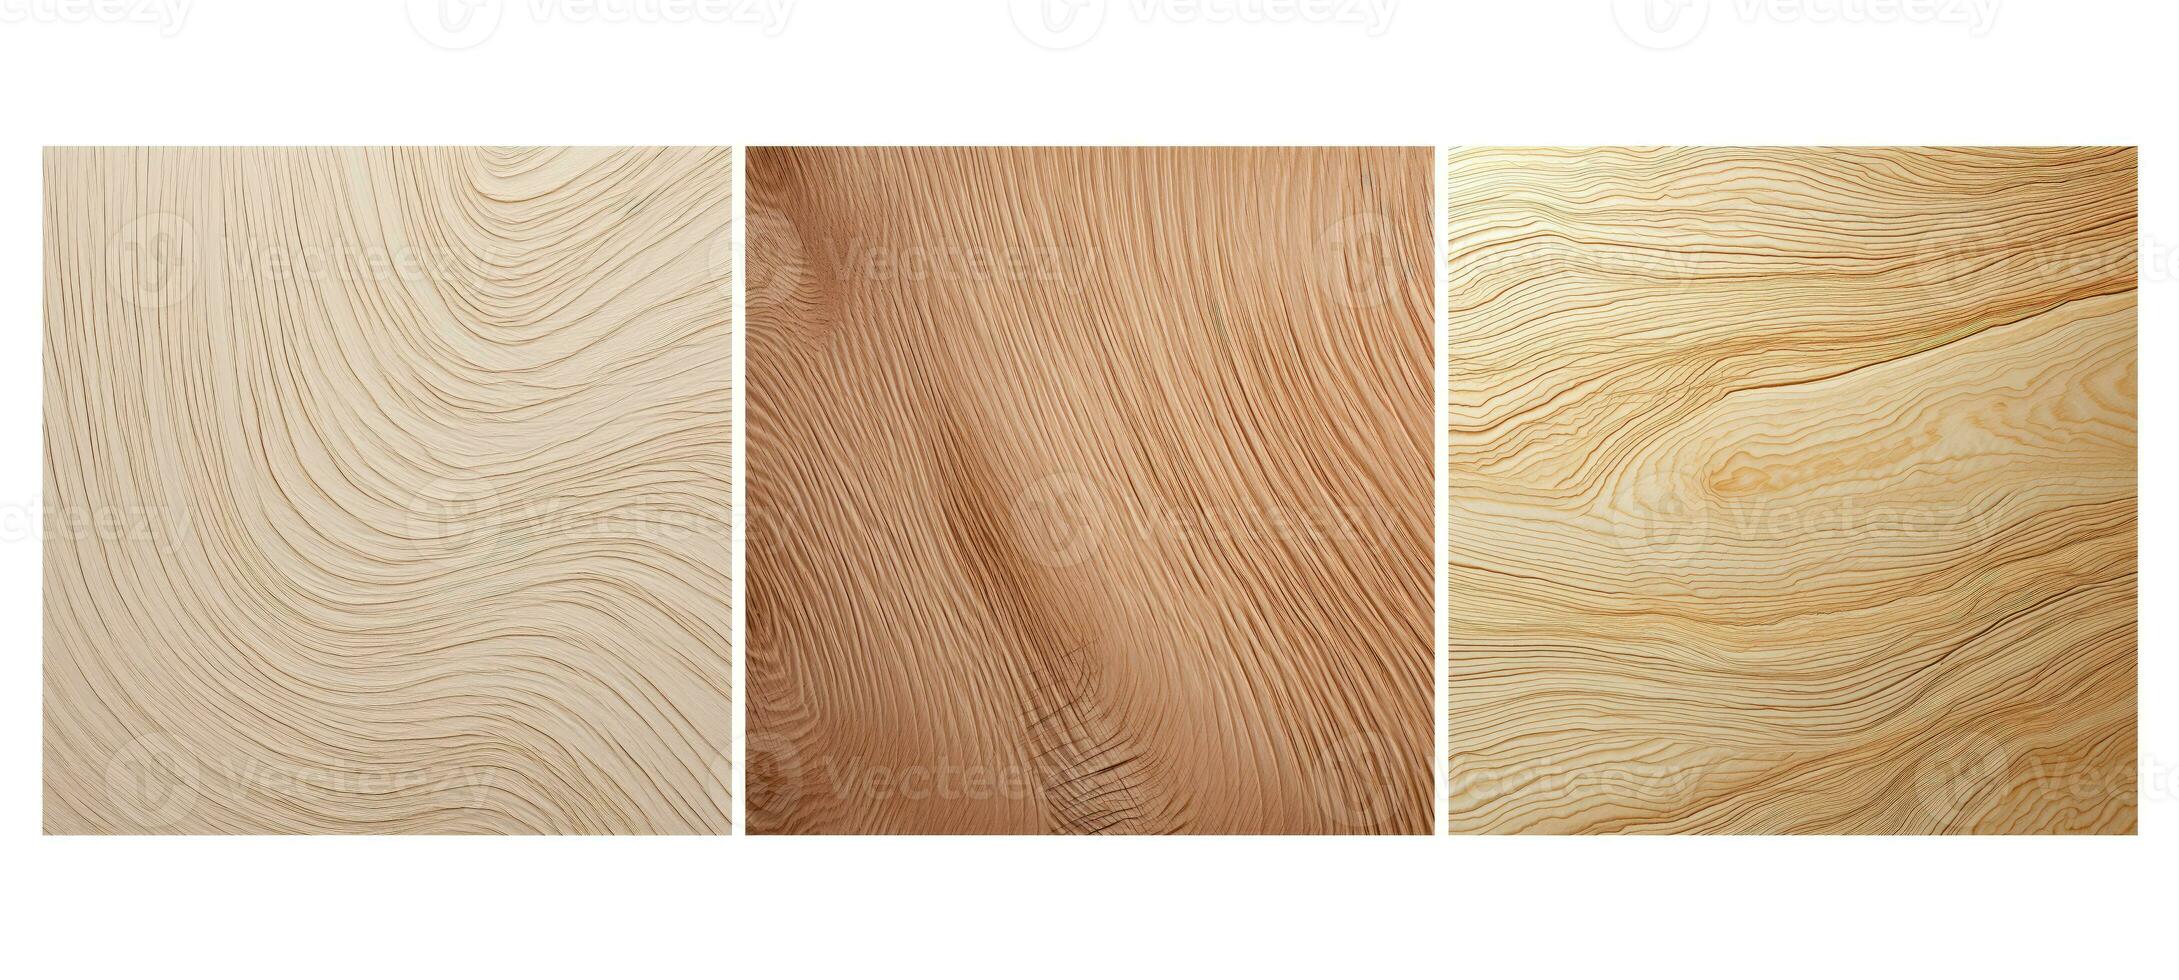 timber balsa wood texture grain photo